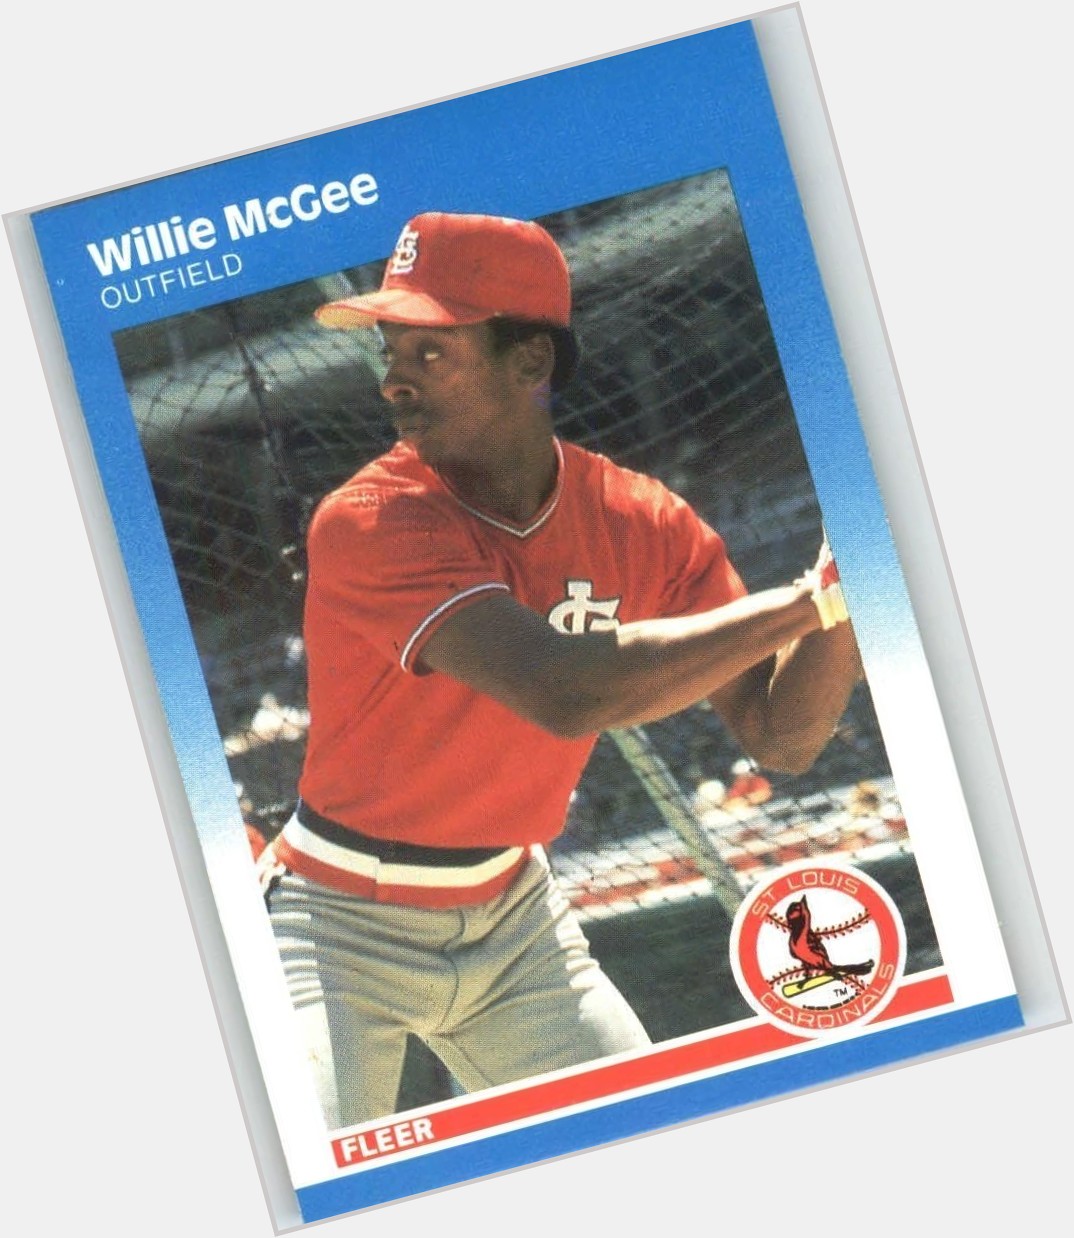 Happy birthday to Willie McGee! 